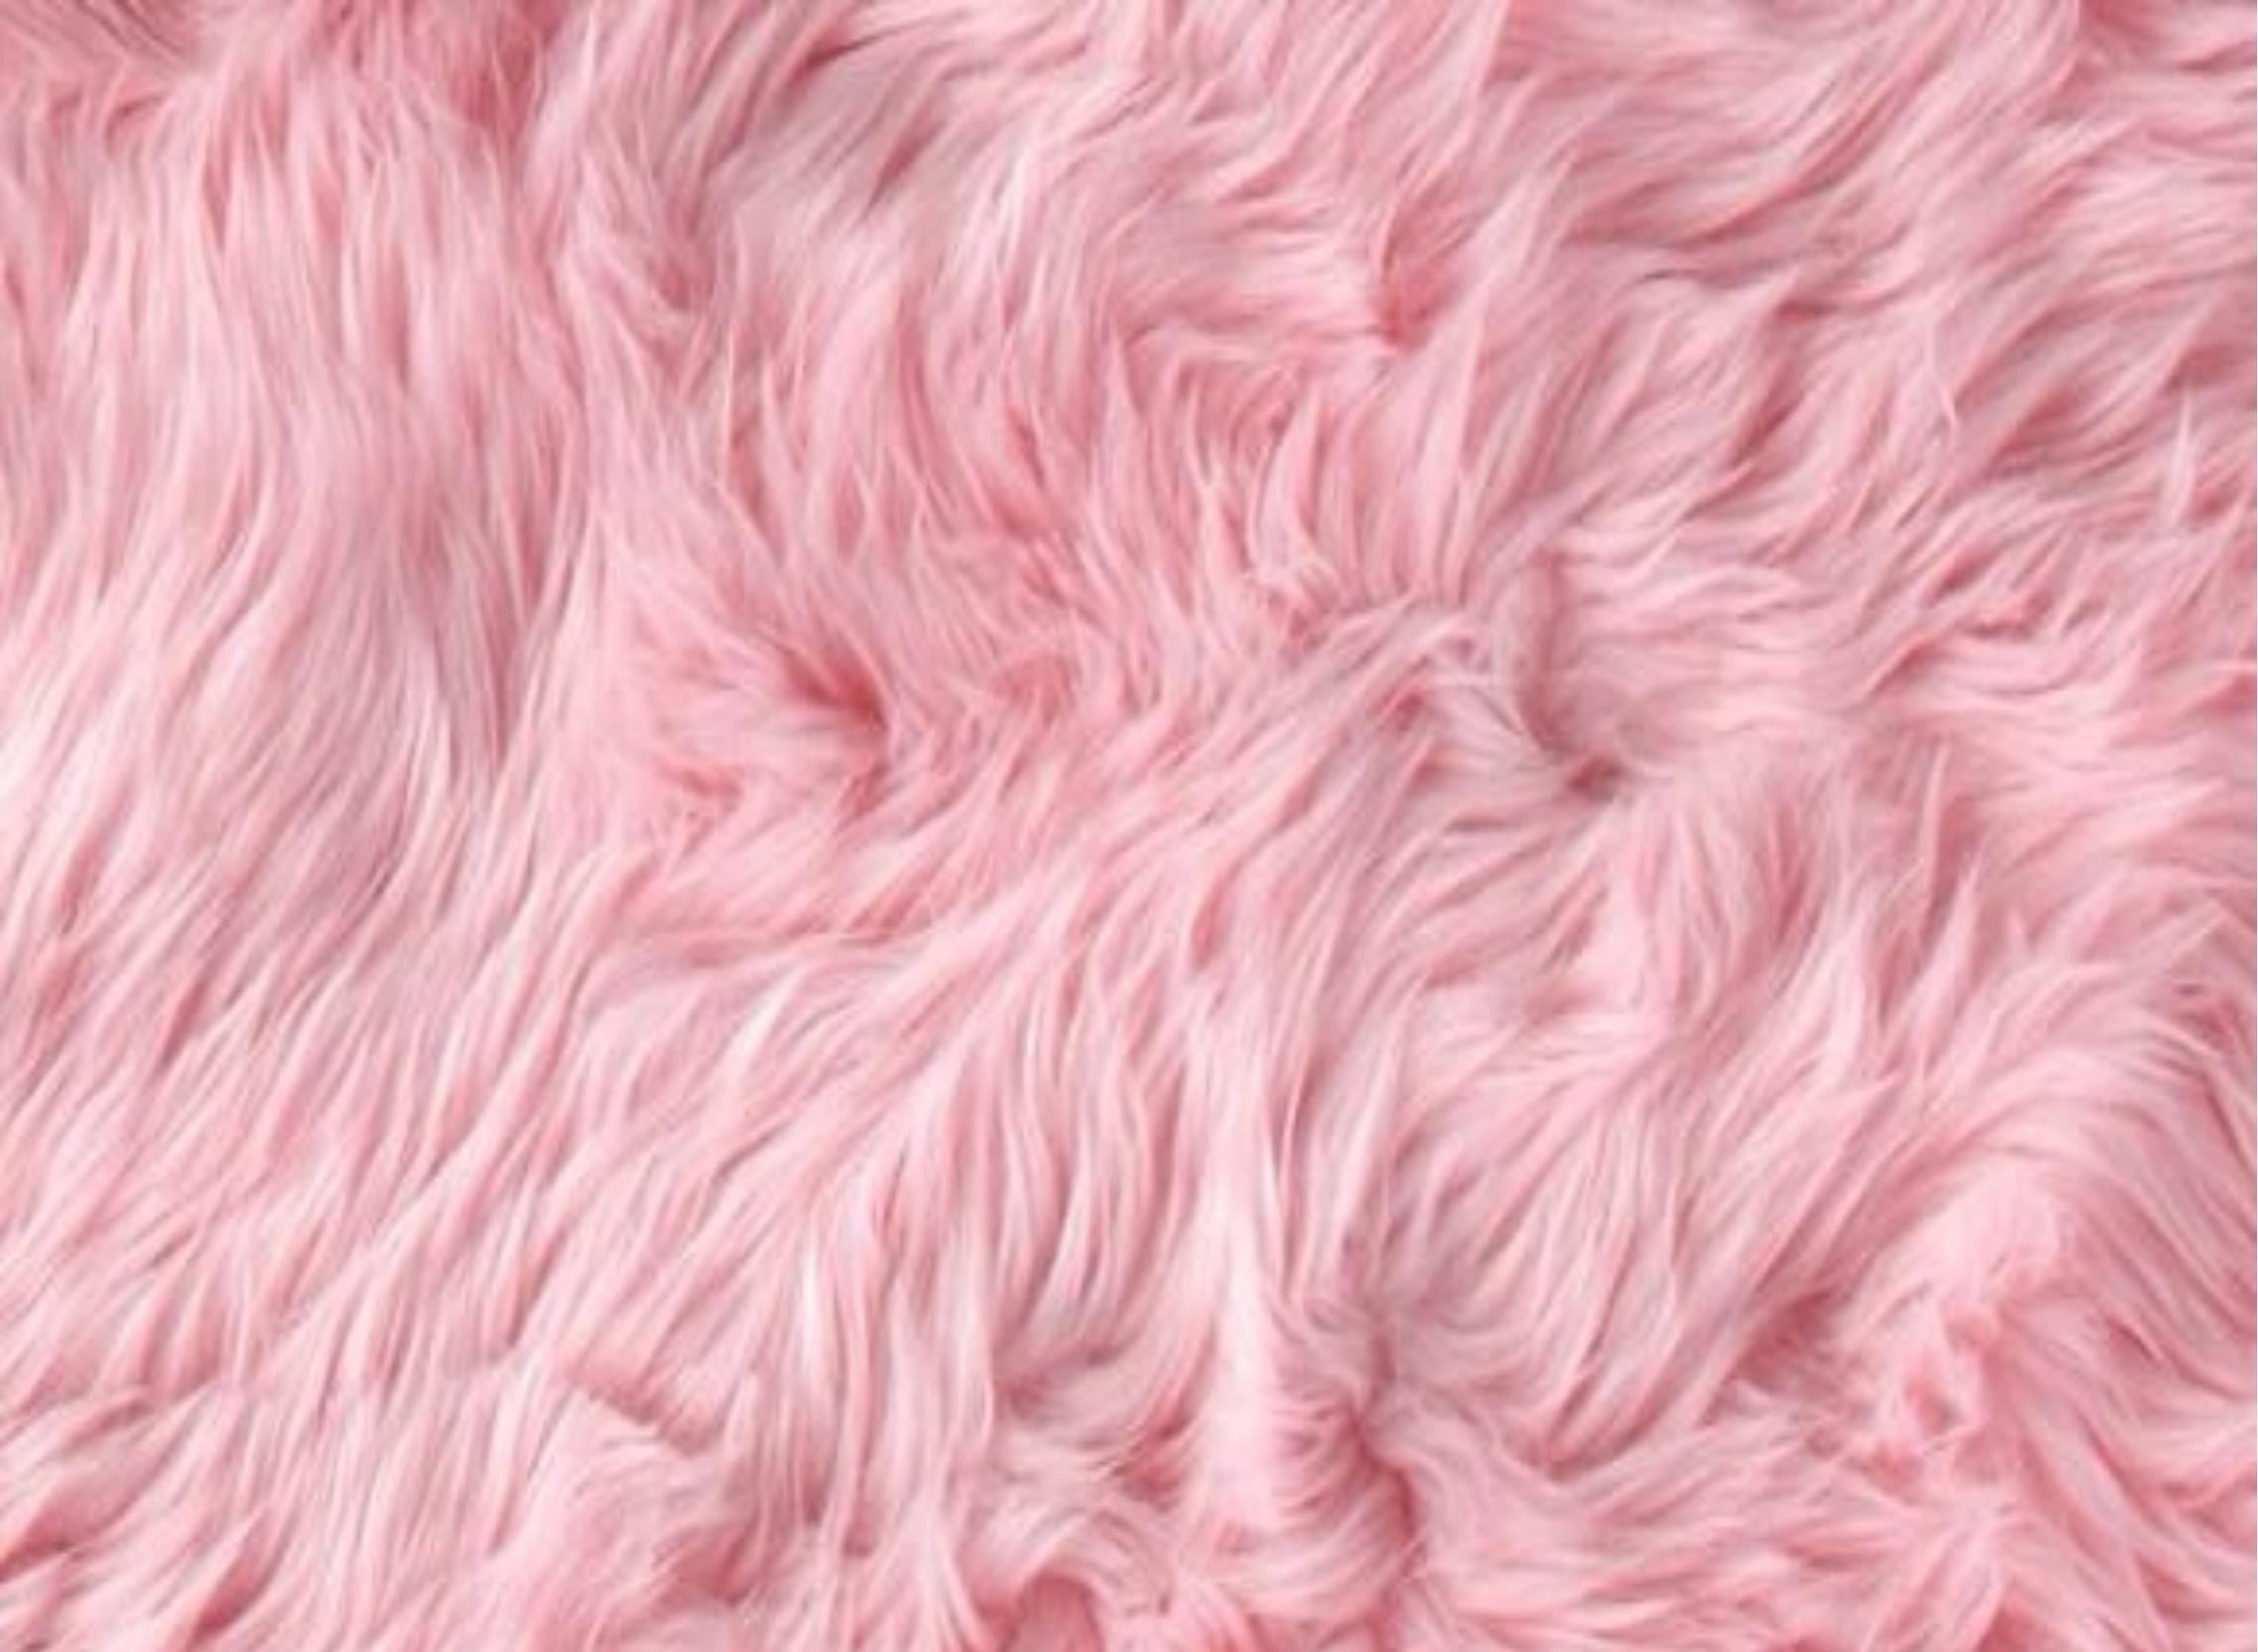 Pink Aesthetic Tumblr Desktop Wallpapers